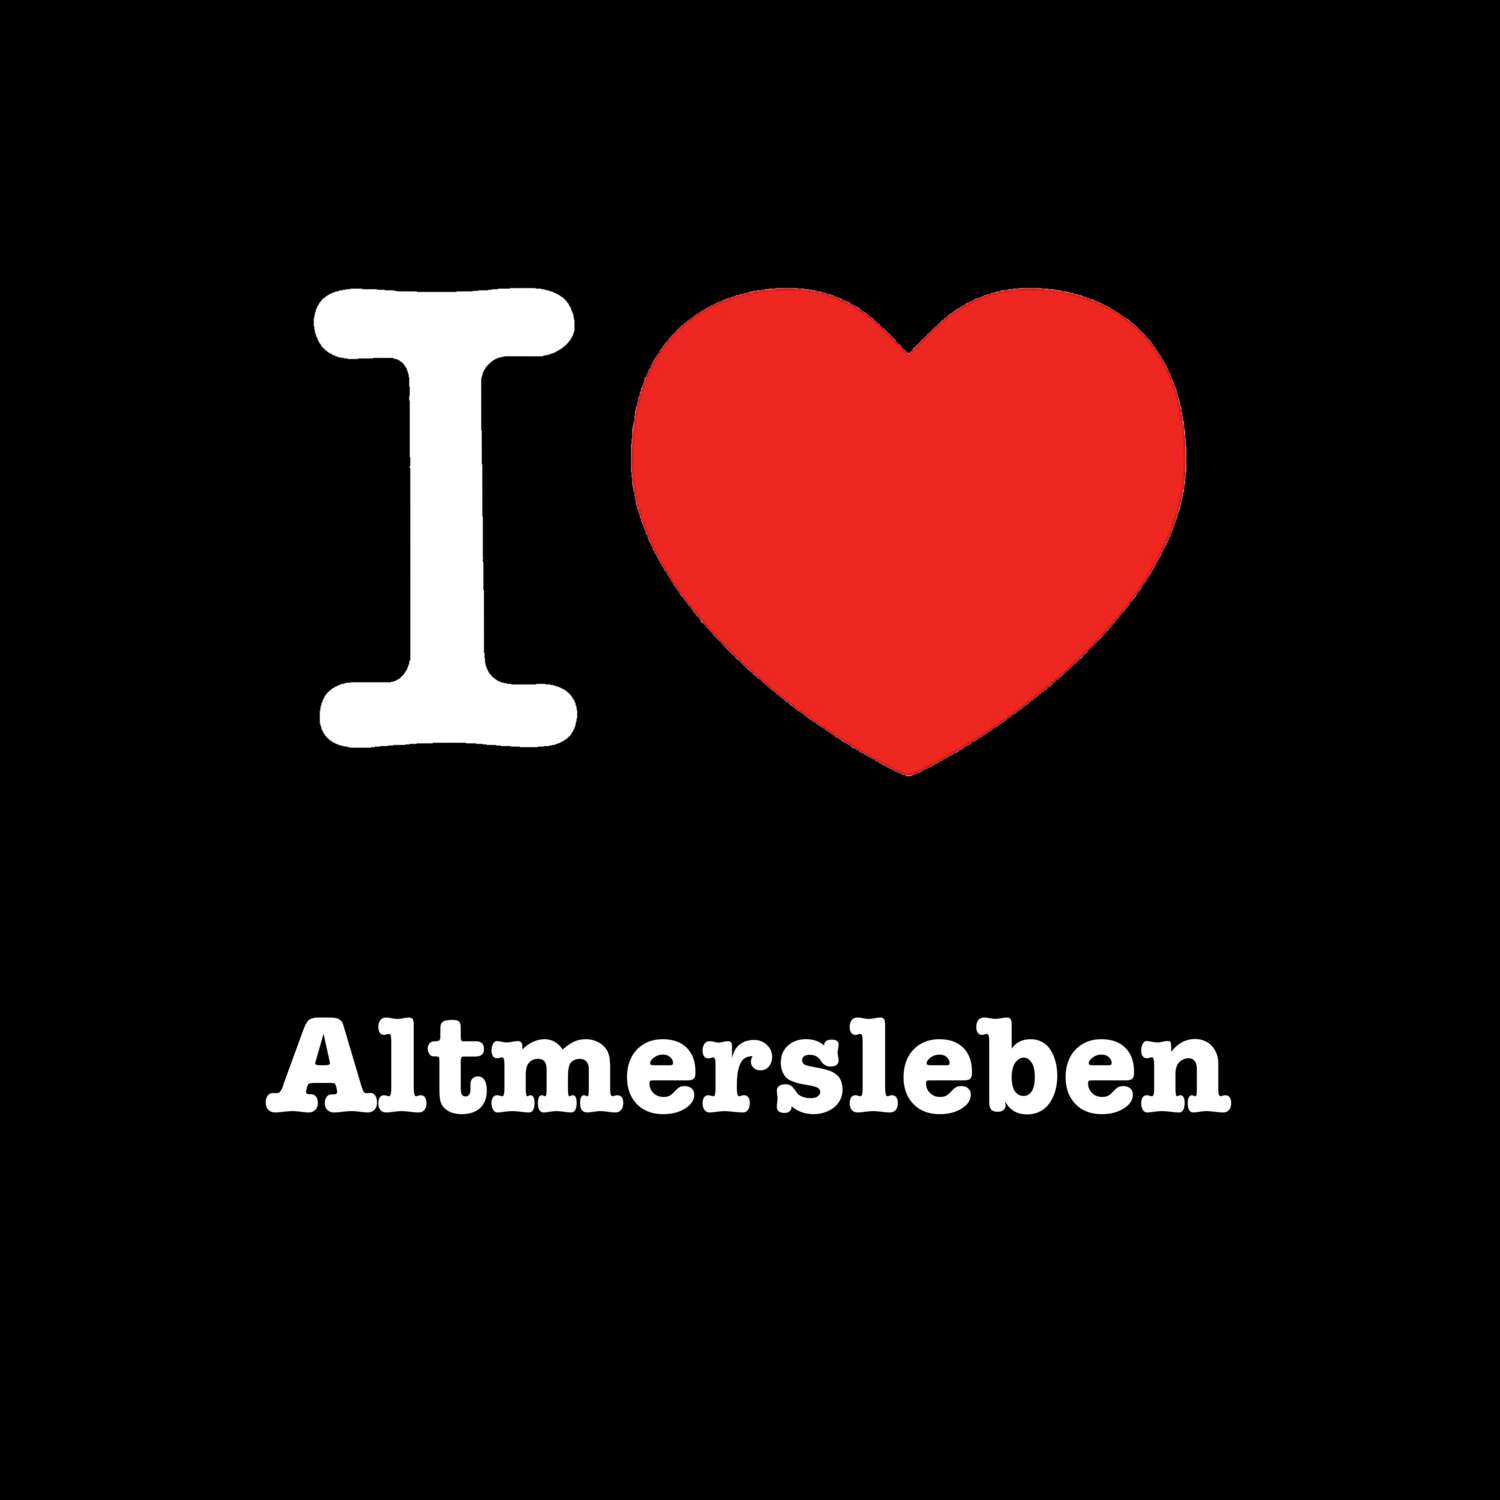 Altmersleben T-Shirt »I love«